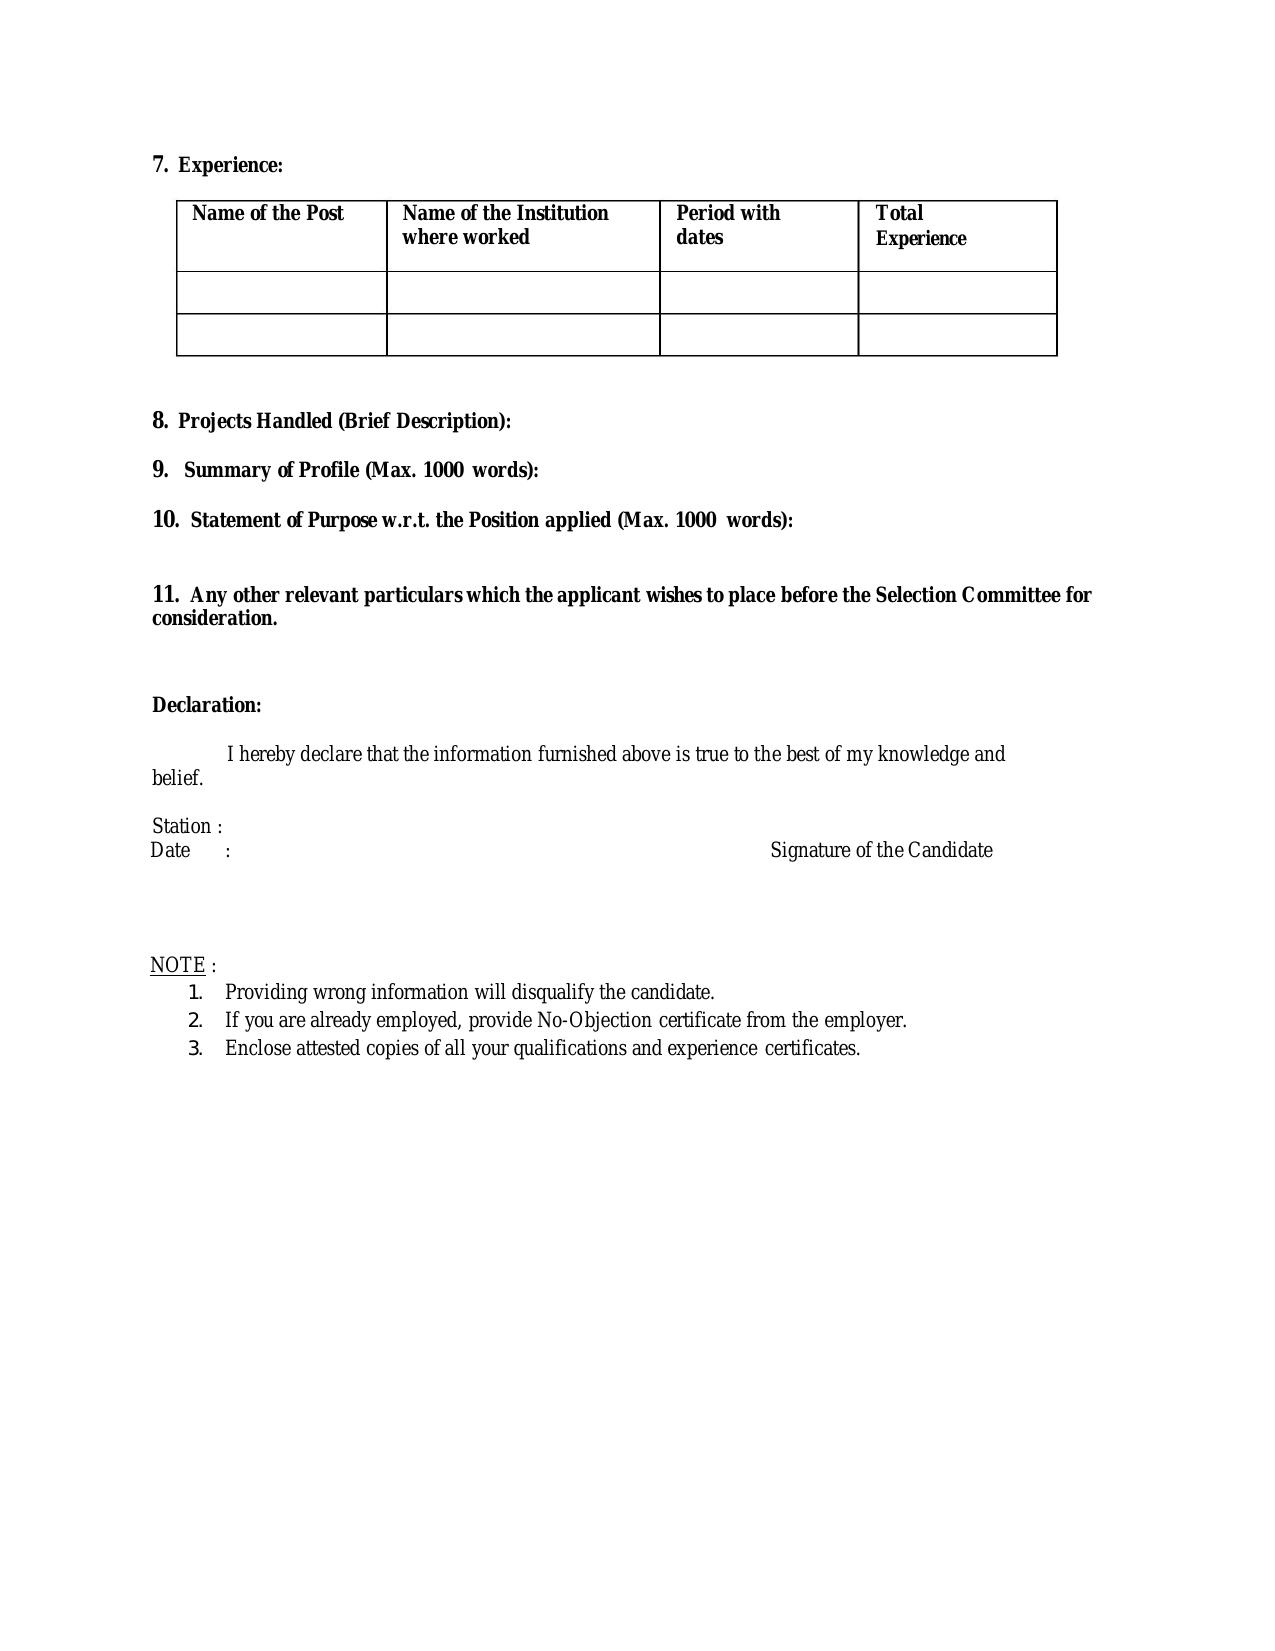 Sri Padmavati Mahila Visvavidyalayam (SPMVV) Invites Application for Technical or Research Assistant Recruitment 2023 - Page 2